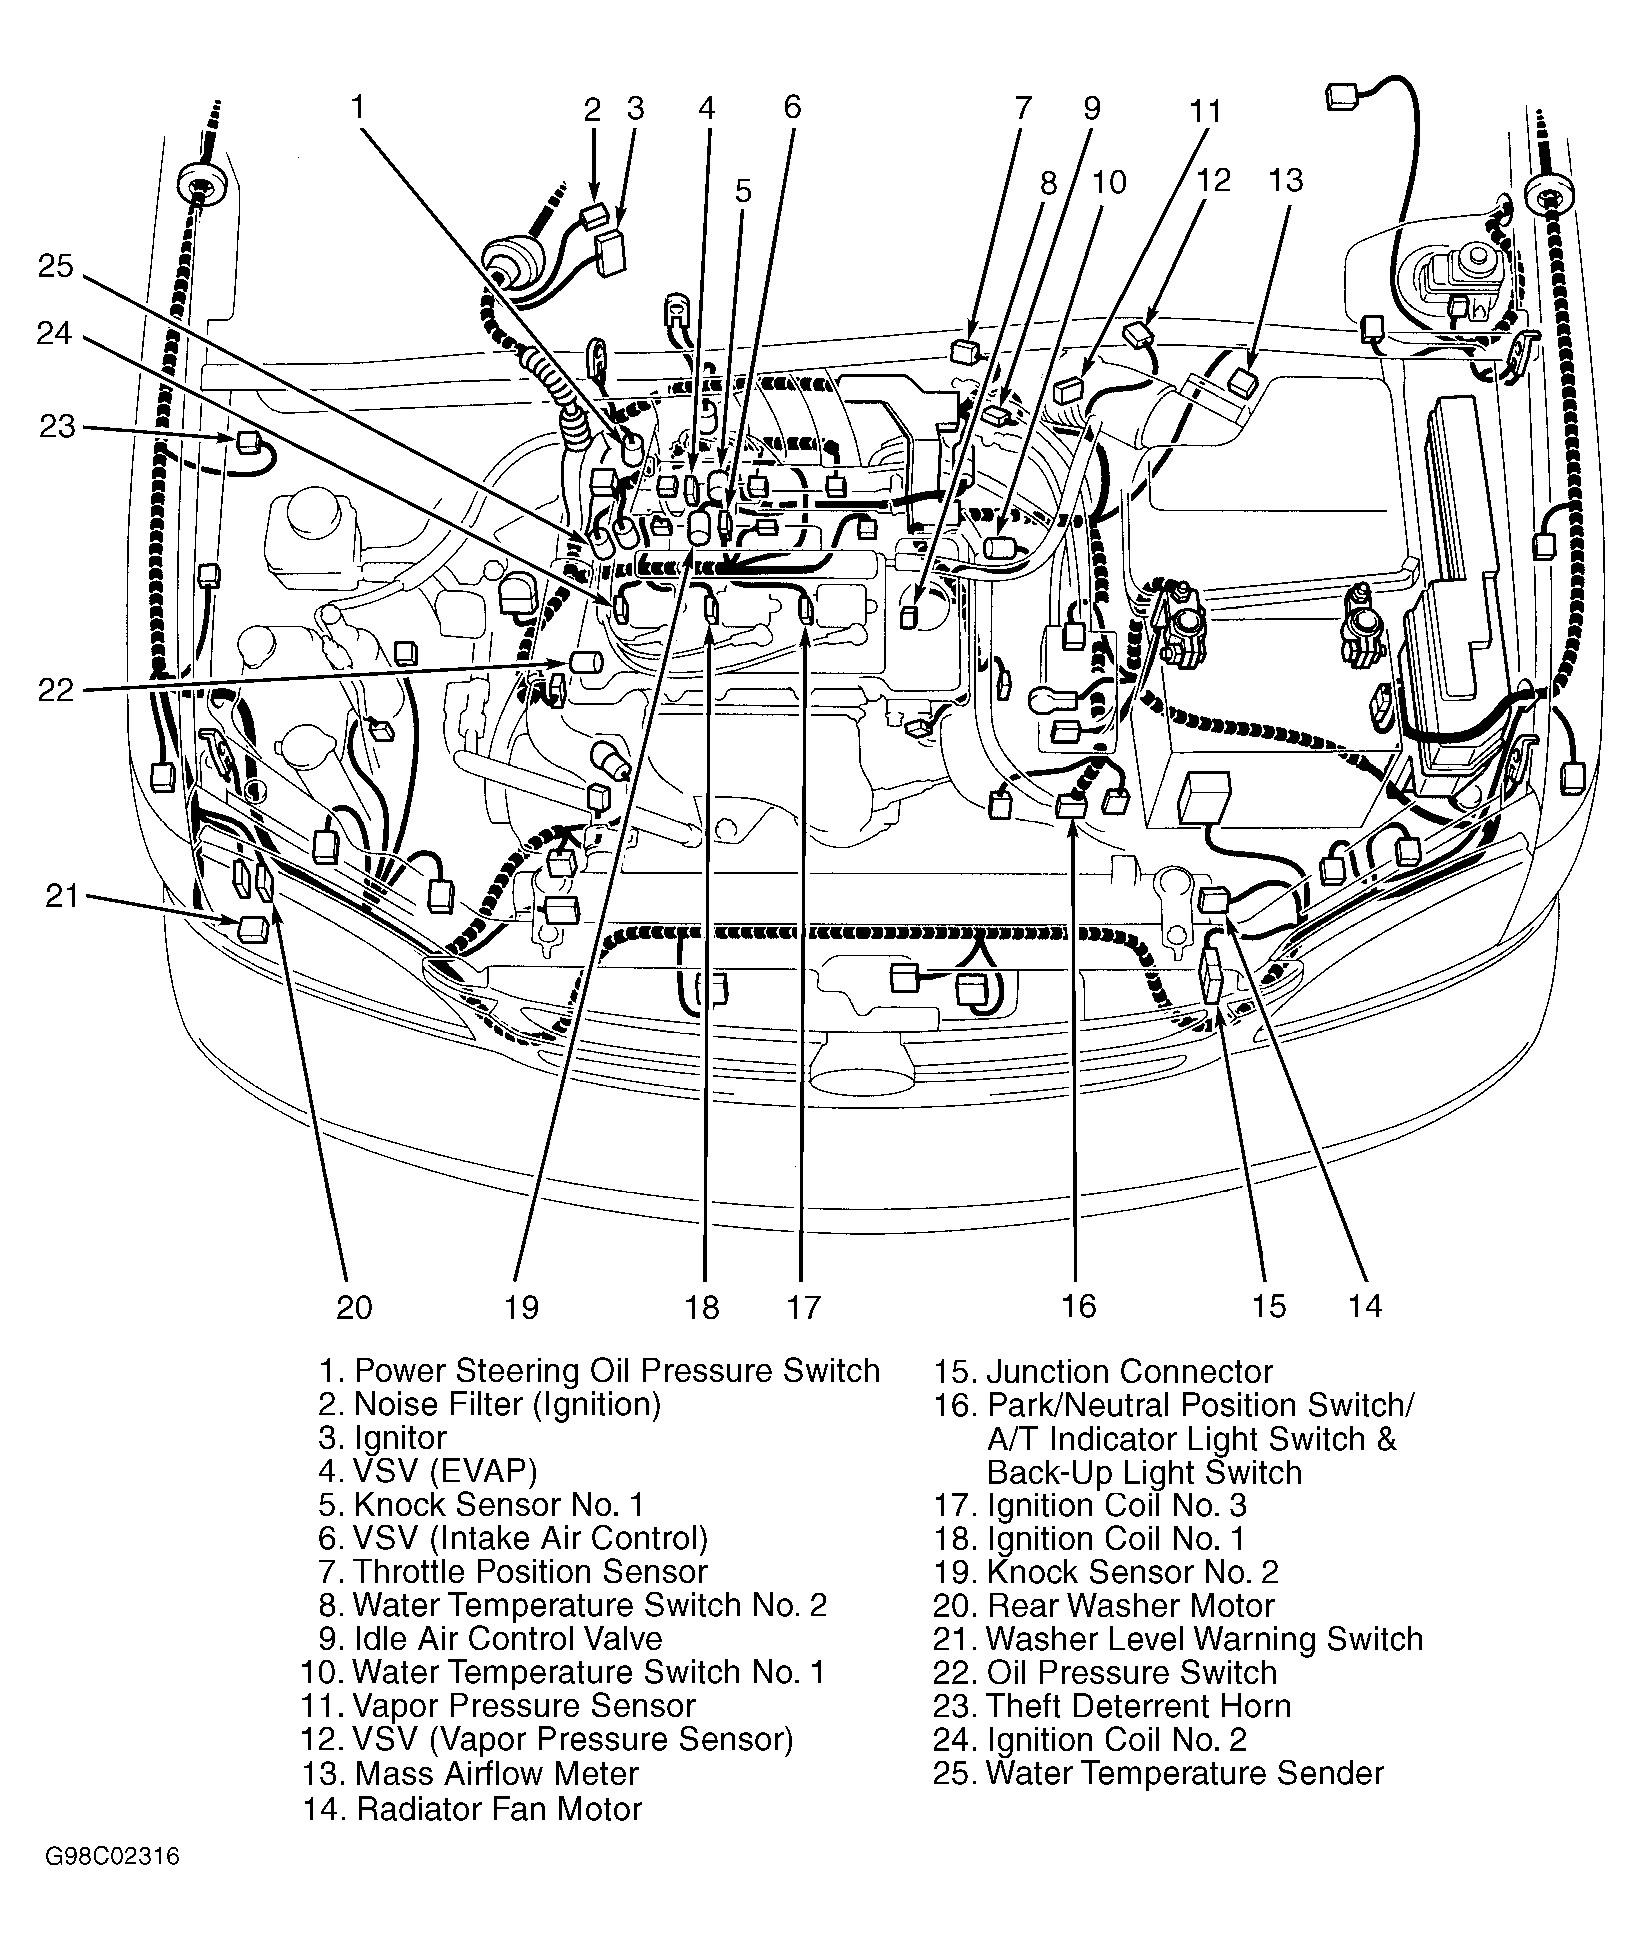 2002 Cadillac Deville Engine Diagram 2001 toyota Tundra Engine Diagram Wiring Diagram Paper Of 2002 Cadillac Deville Engine Diagram